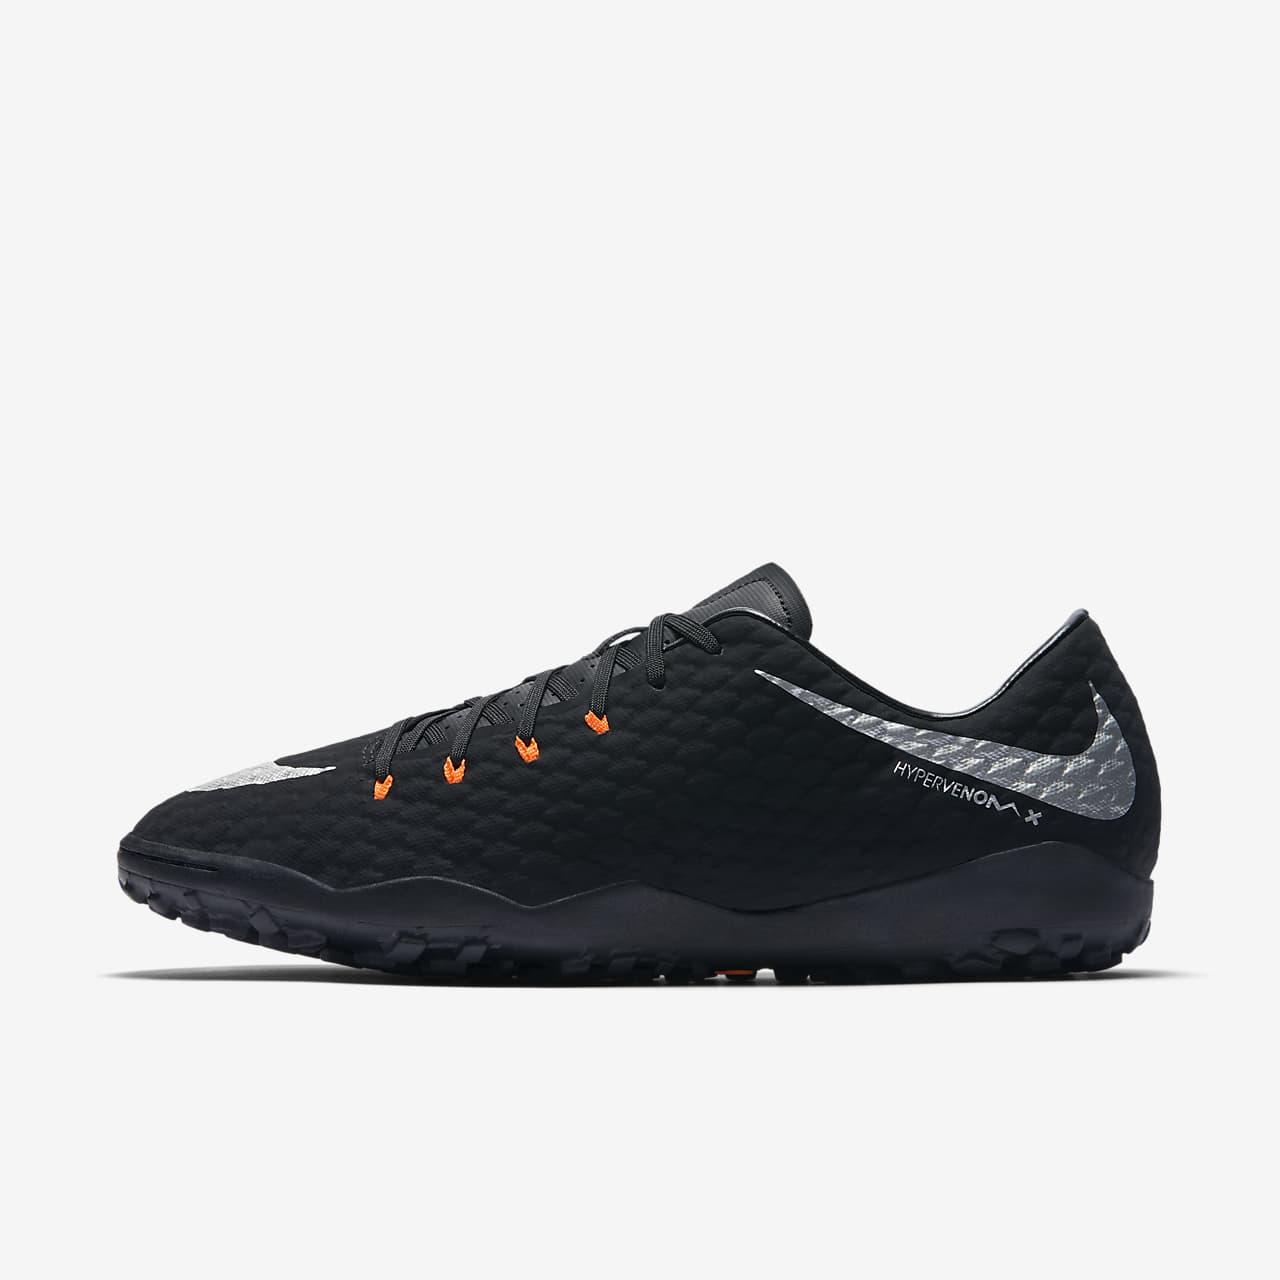 Nike HypervenomX Phelon 3 Turf Football Shoe. ID